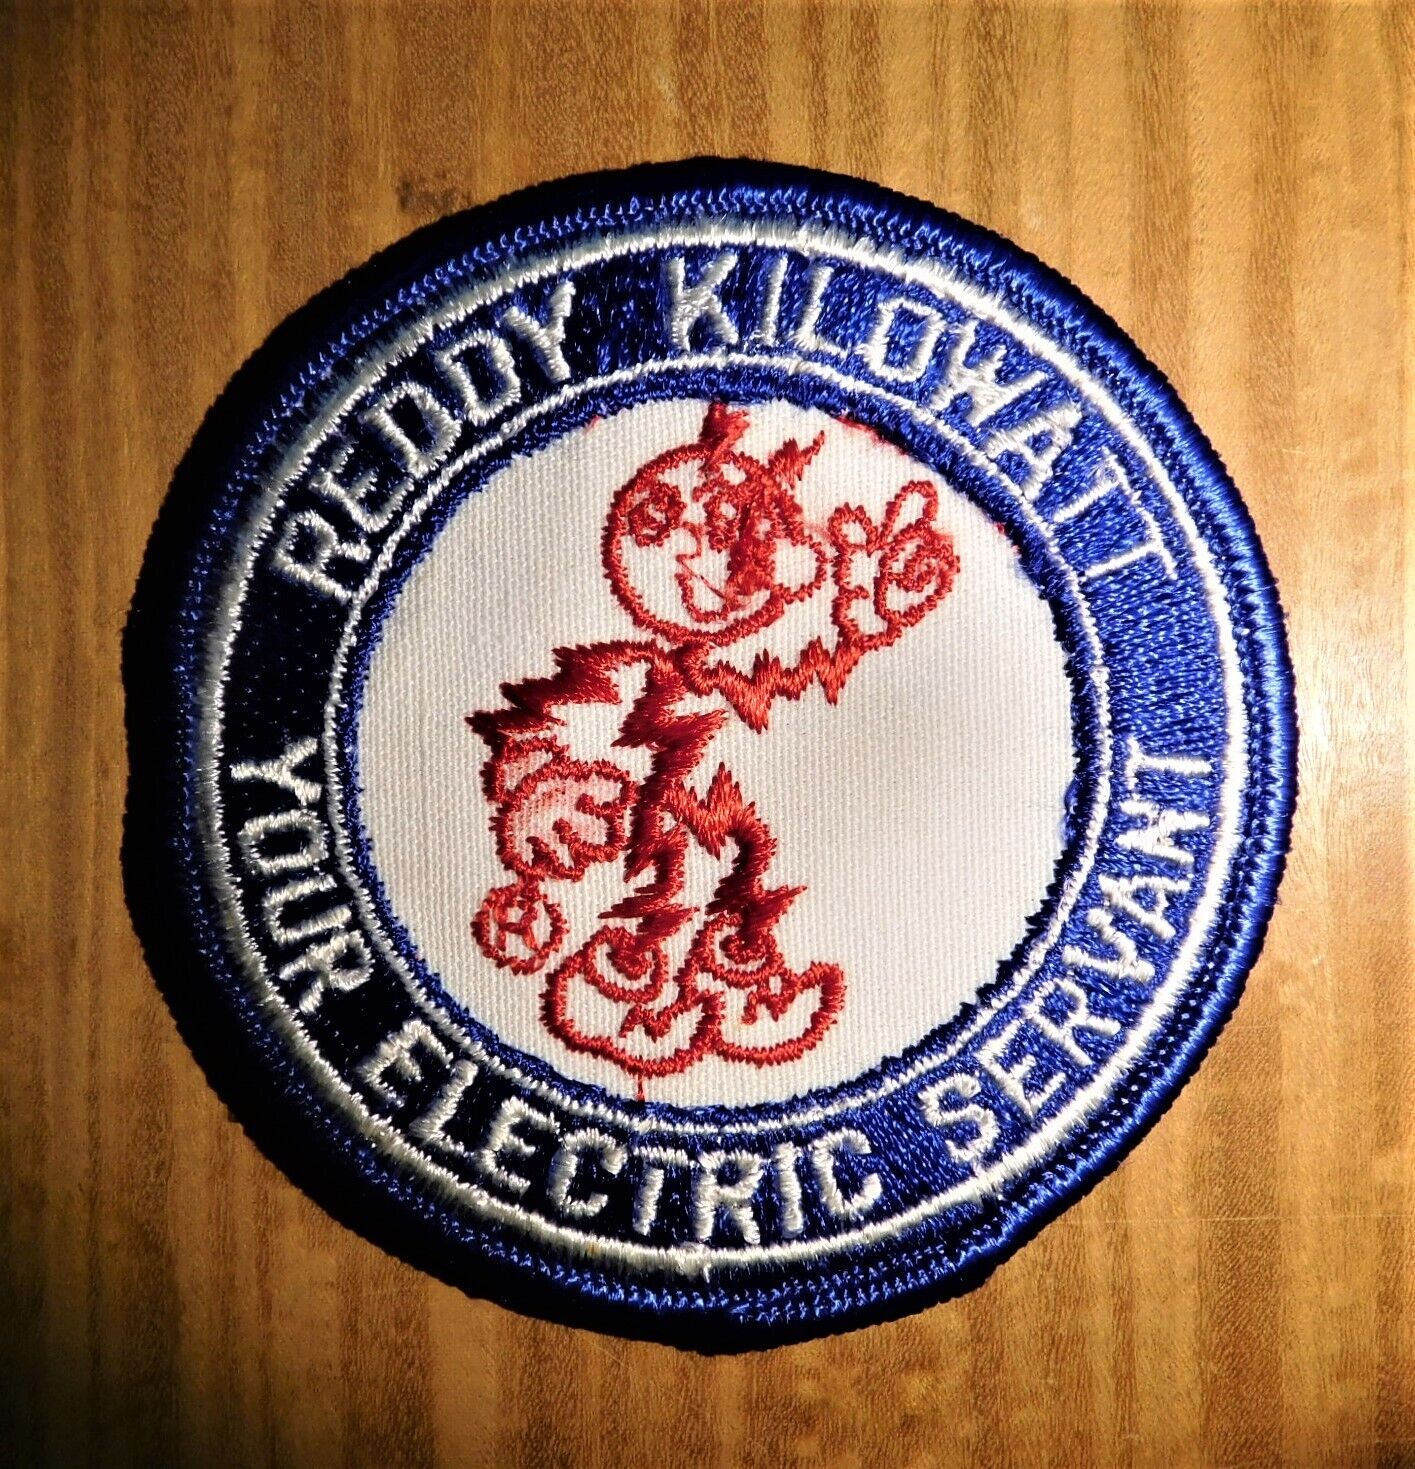 GEMSCO NOS Vintage Patch REDDY KILOWATT - YOUR ELECTRIC SERVANT  - Original 1980